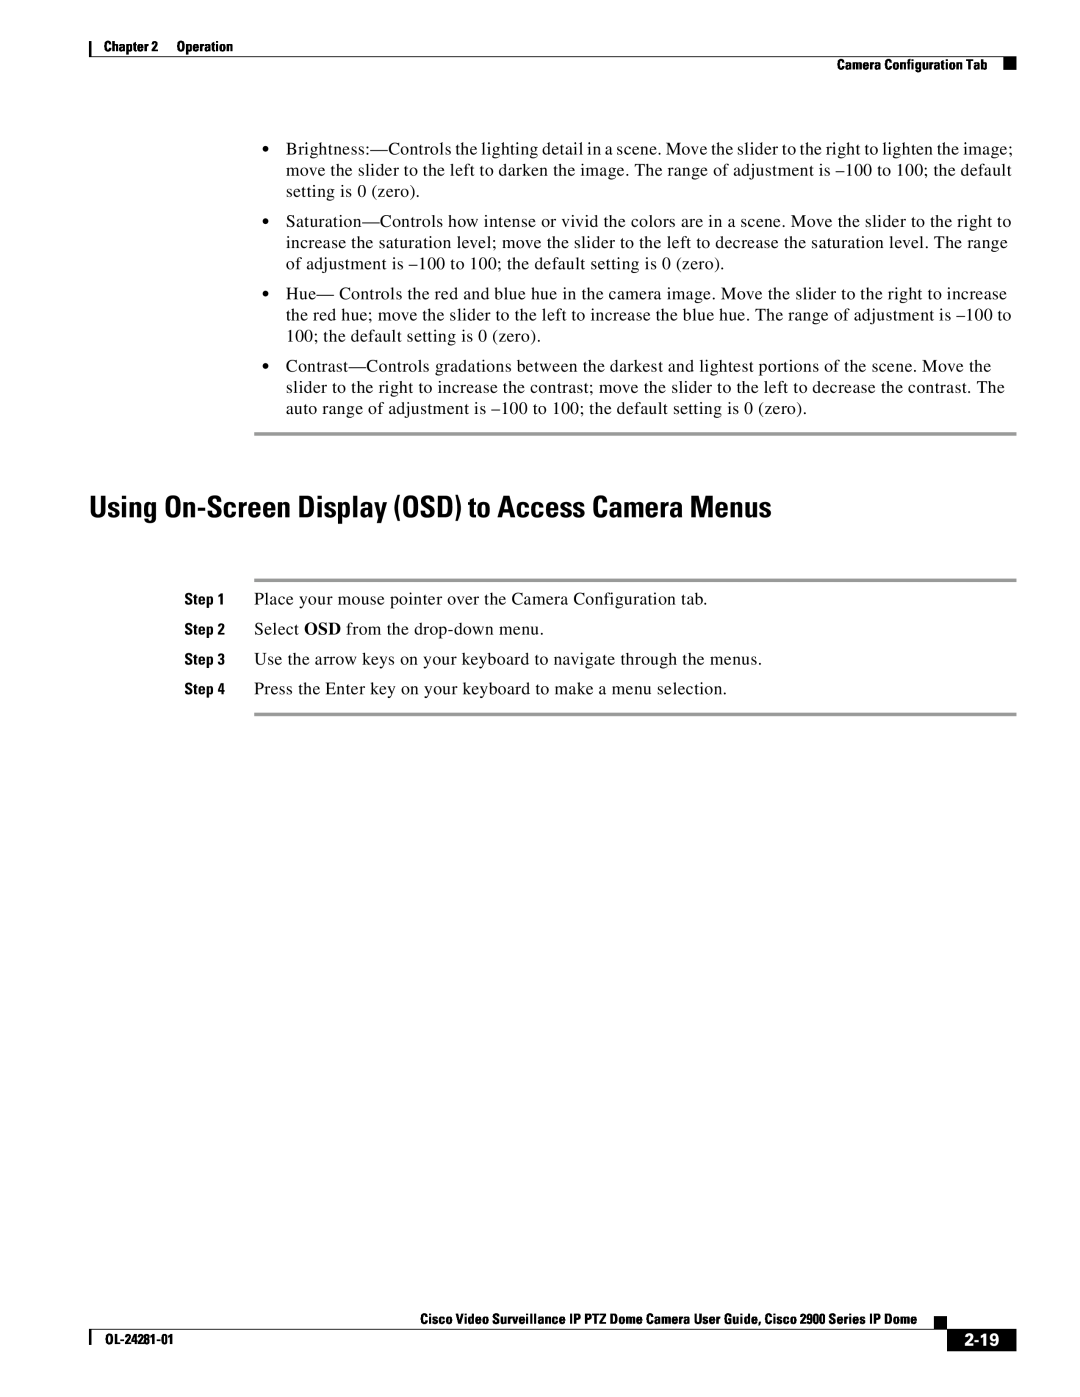 Cisco Systems 2900, OL-24281-01 manual Using On-ScreenDisplay OSD to Access Camera Menus, 2-19 